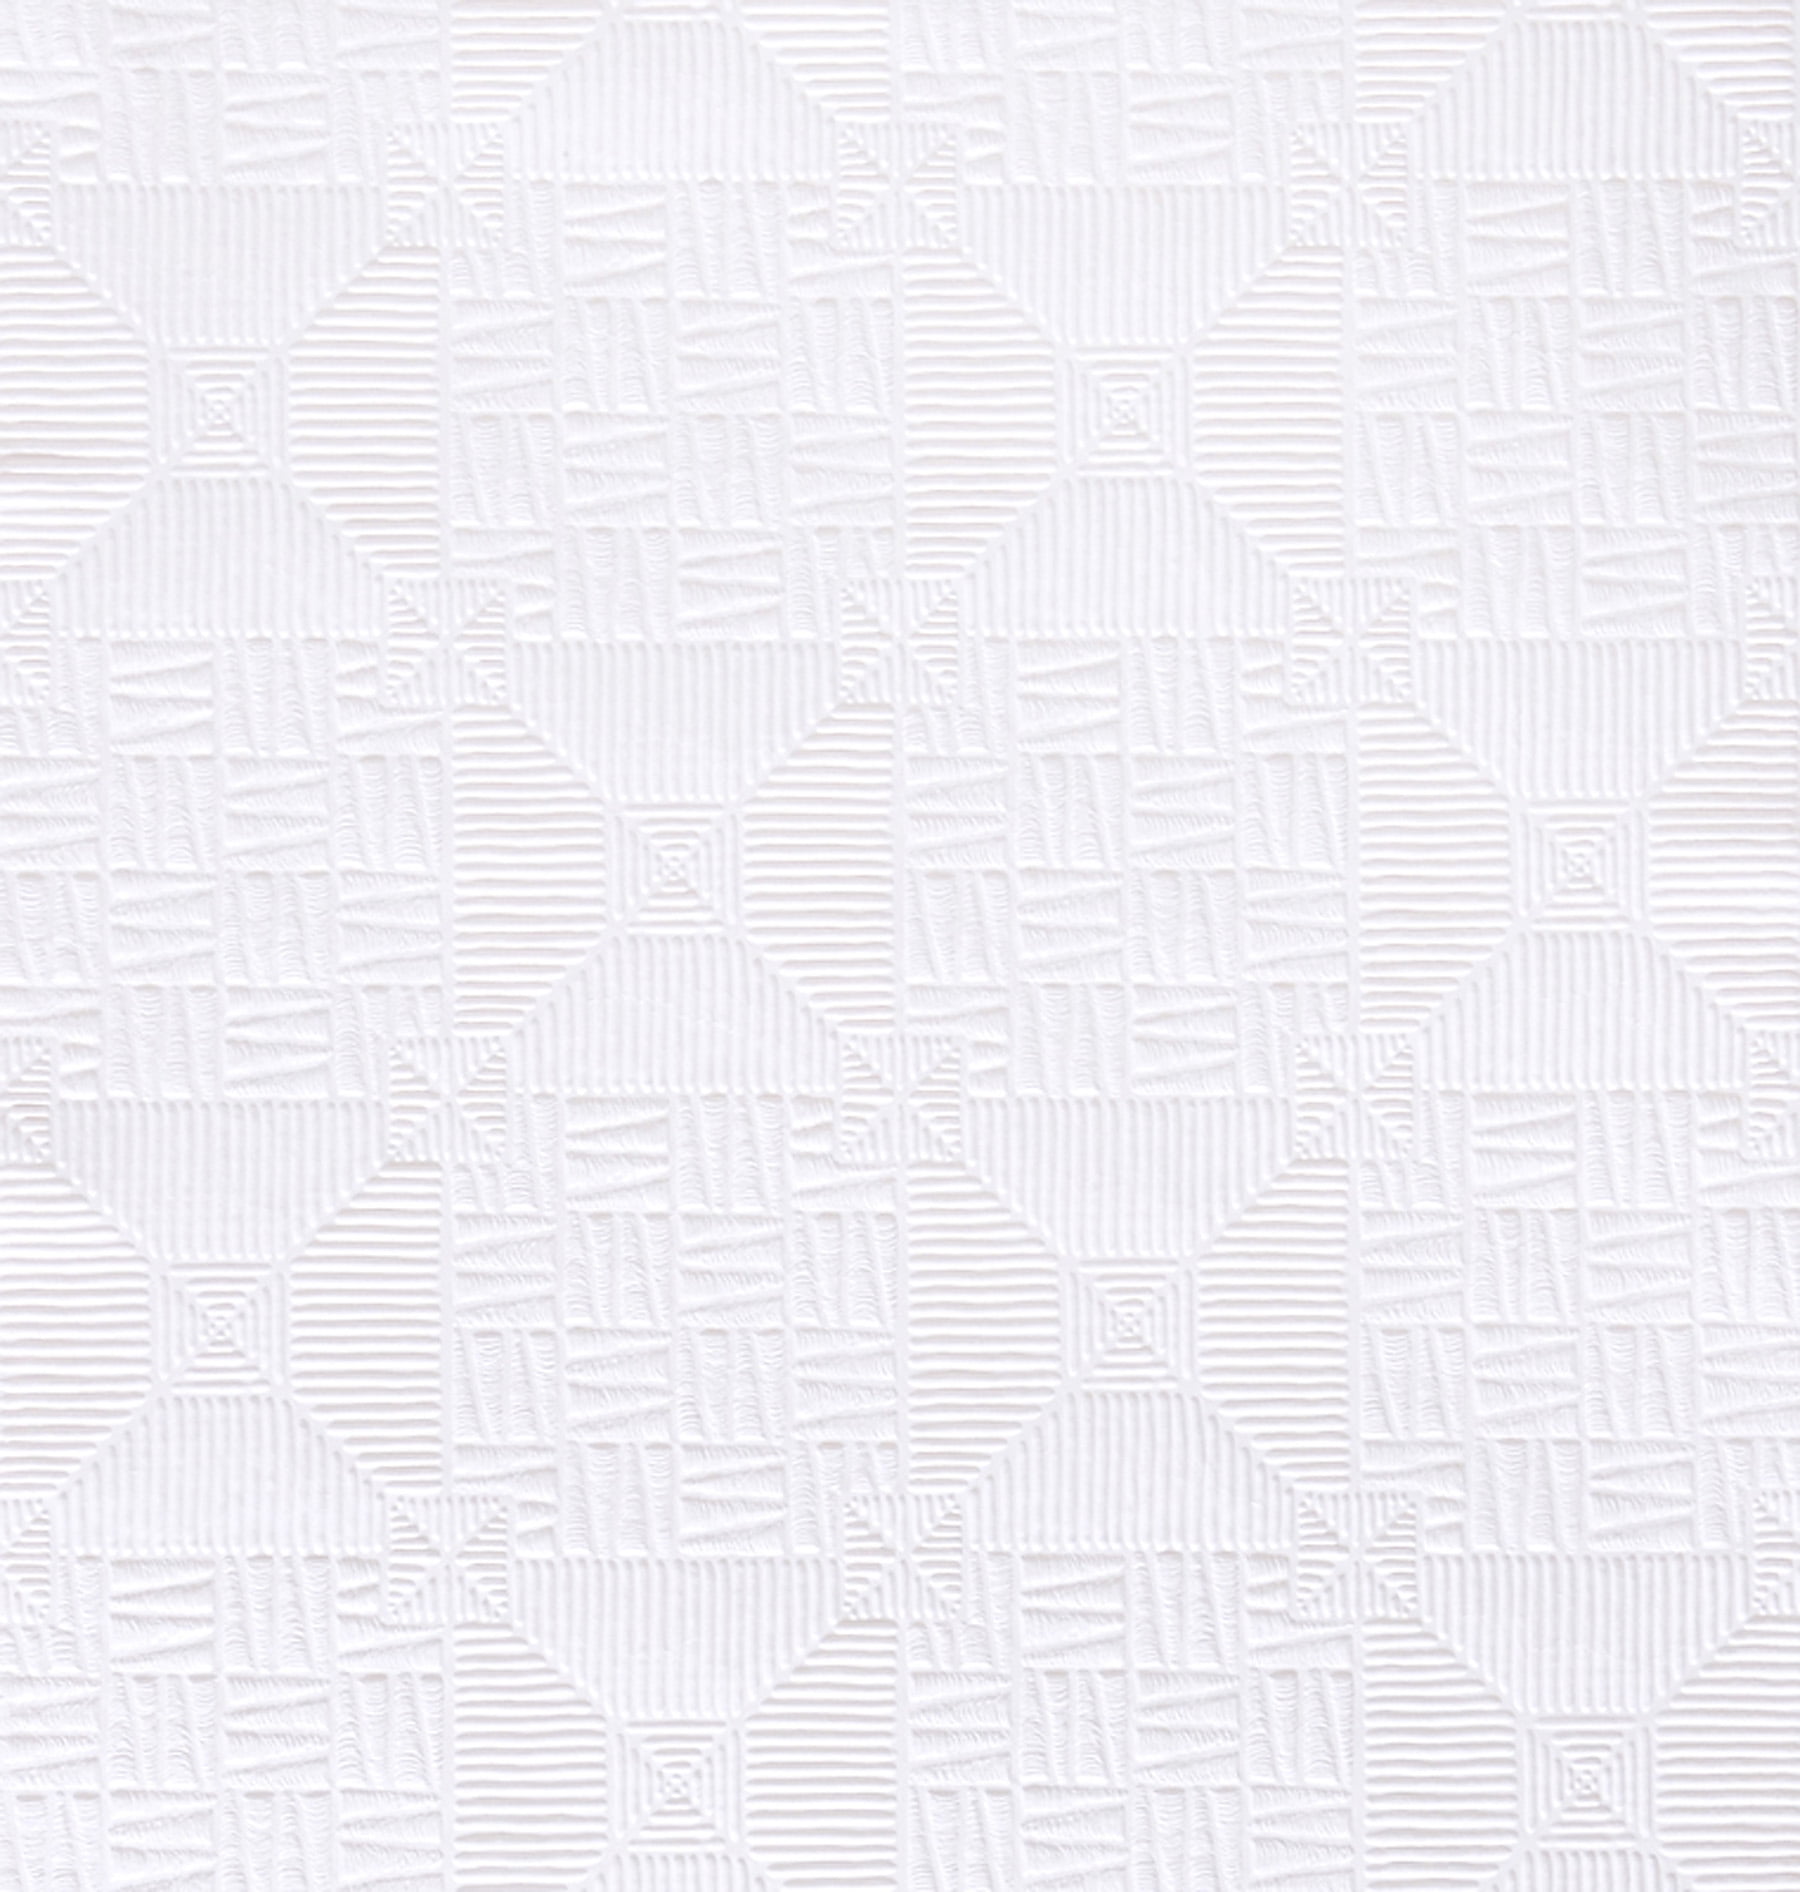 Brewster 2767-24438 Rogue Concrete Texture Wallpaper, Off-White